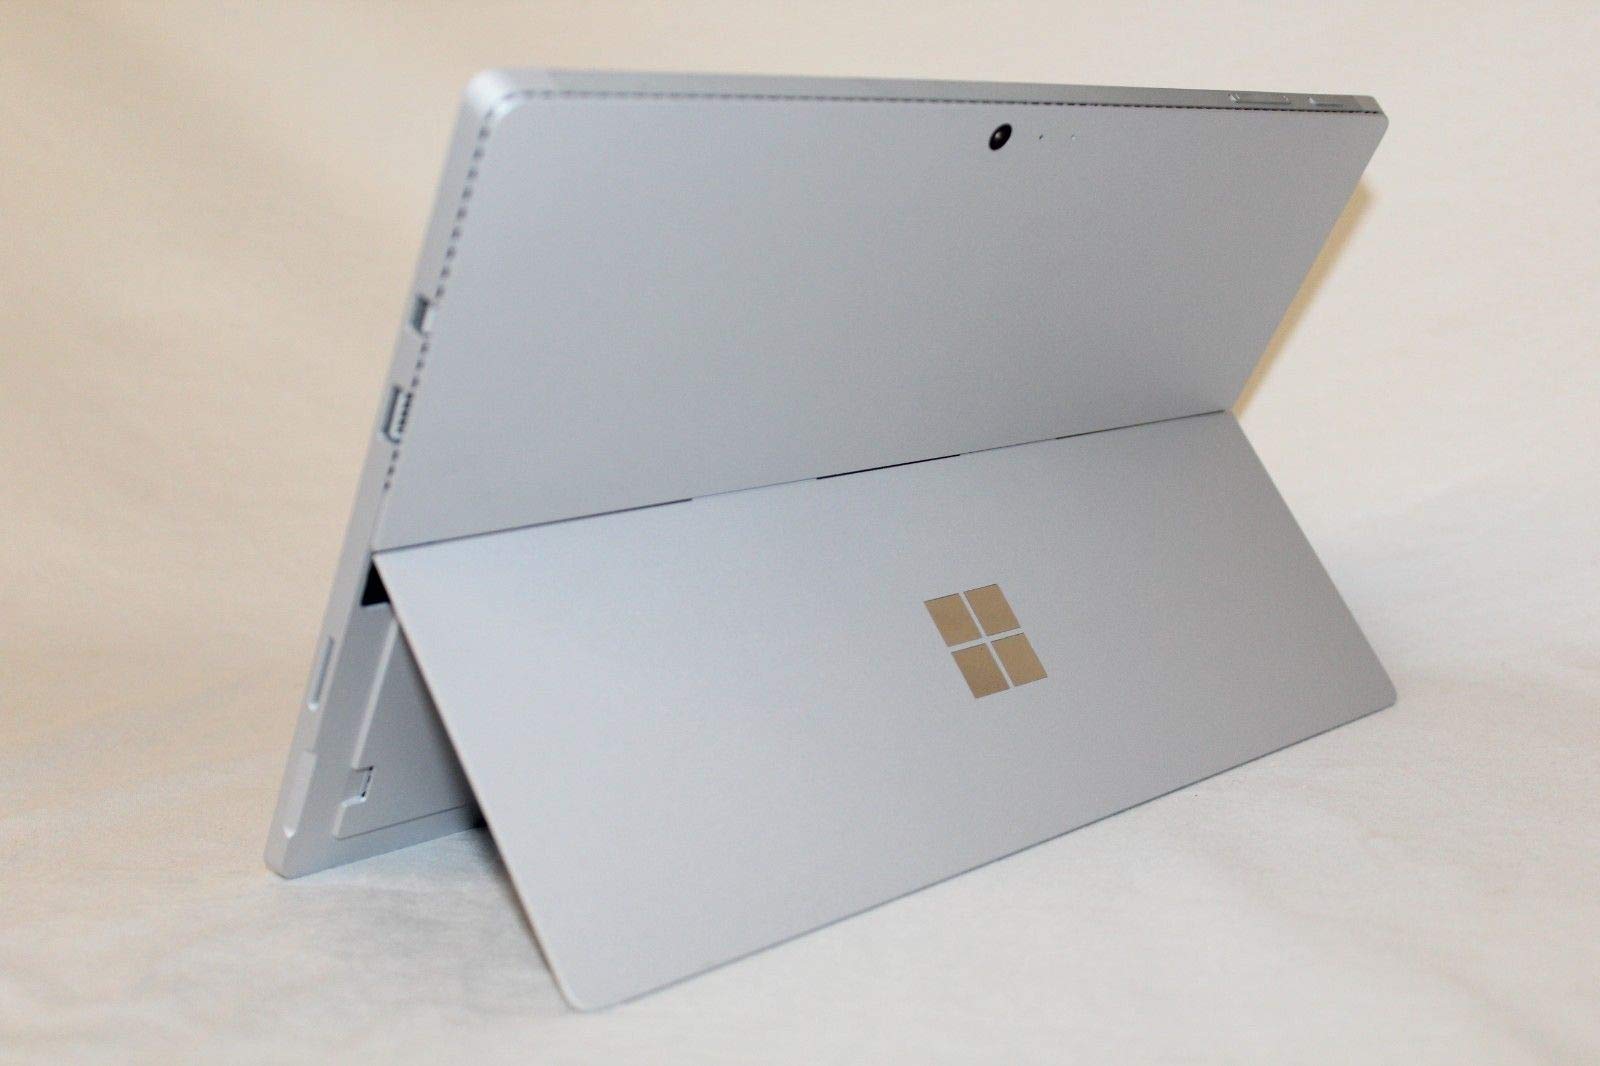 Microsoft Surface Pro 4 (Intel Core i5, 4GB RAM, 128GB) with Windows 10 Anniversary (Renewed)